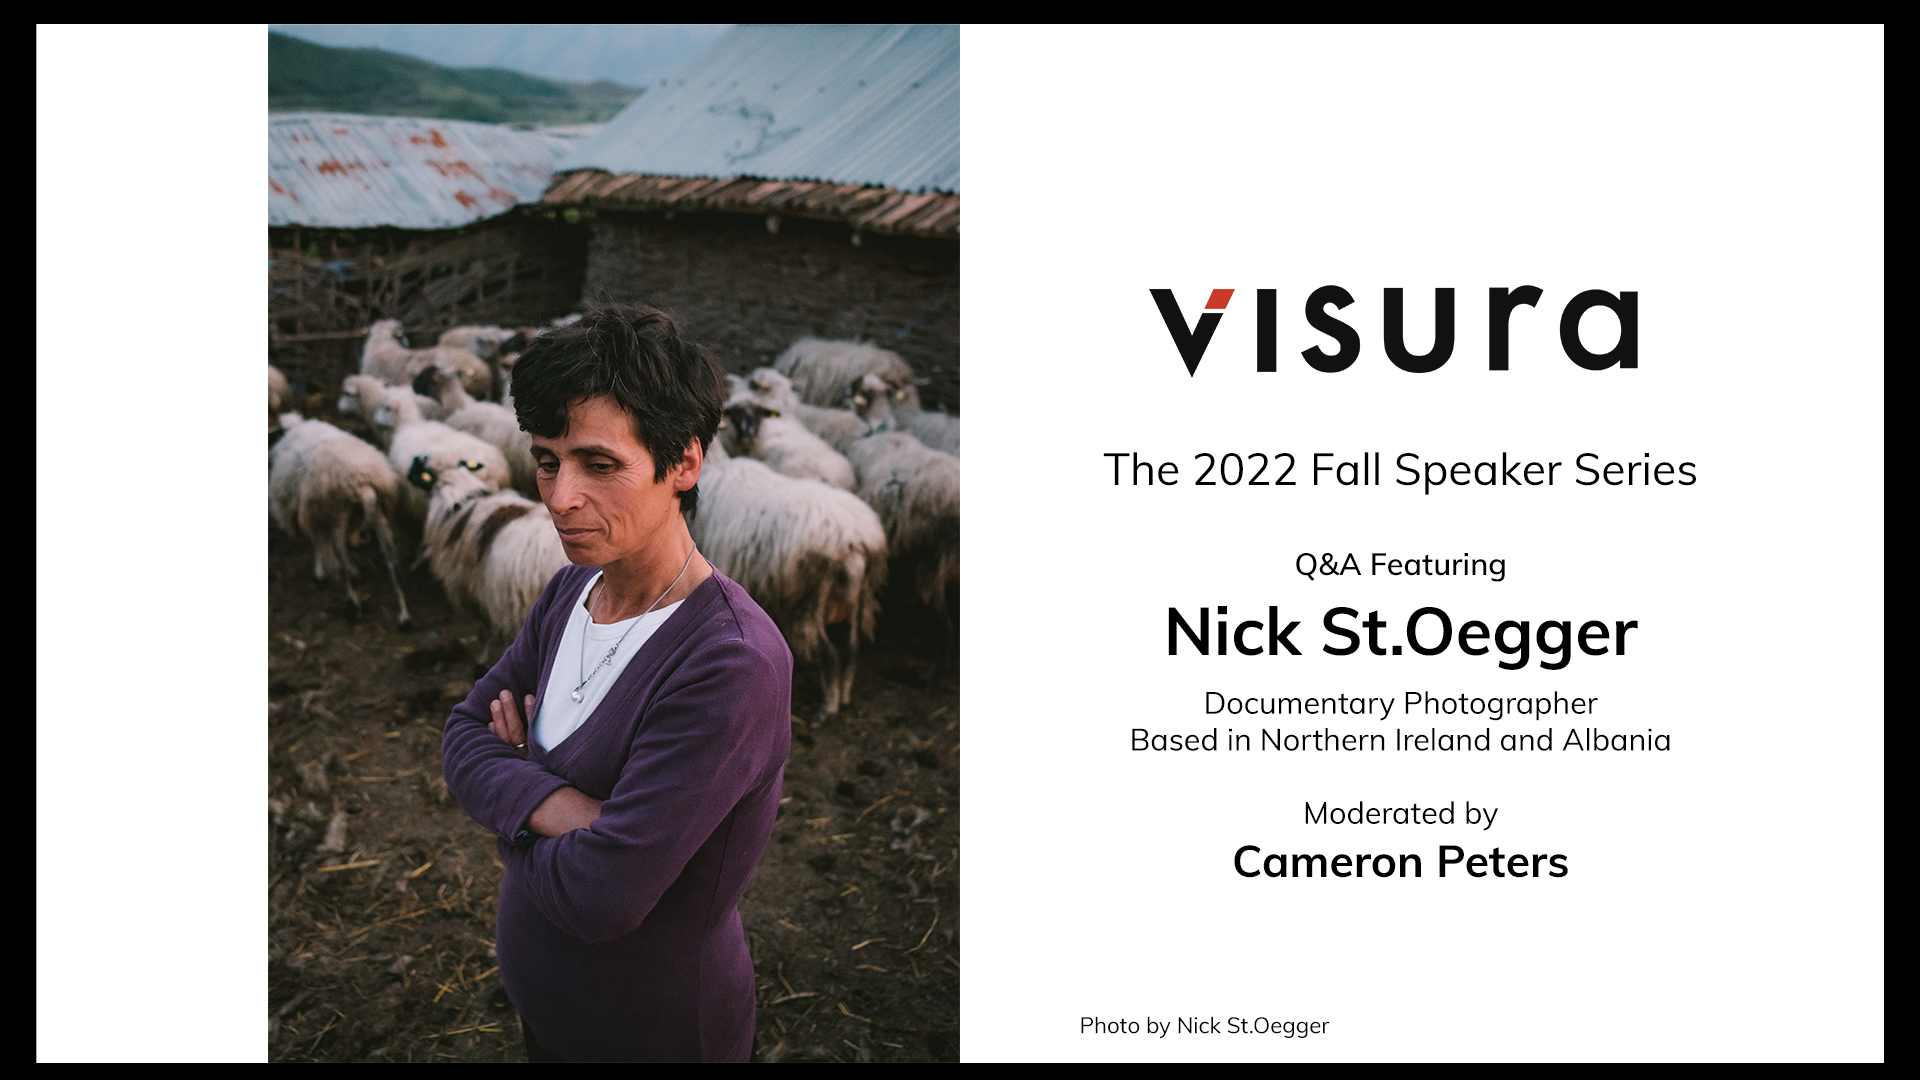 Visura’s 2022 Fall Speaker Series Launches with Documentary Photographer Nick St. Oegger